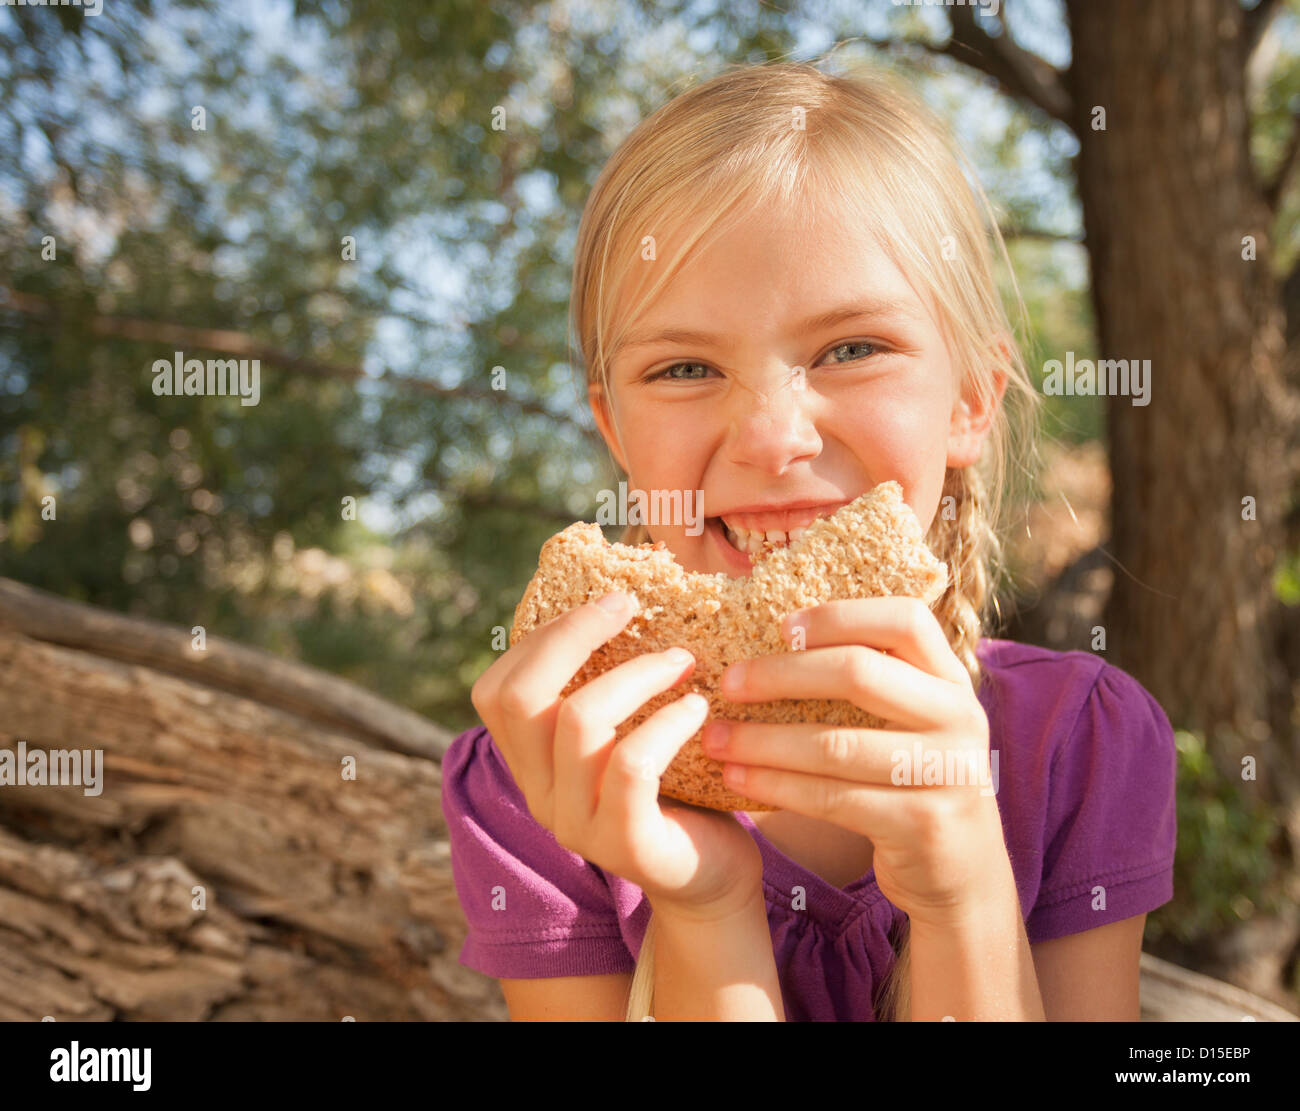 USA, Utah, Lehi, Little girl (4-5) eating peanut butter and jelly sandwich  Stock Photo - Alamy